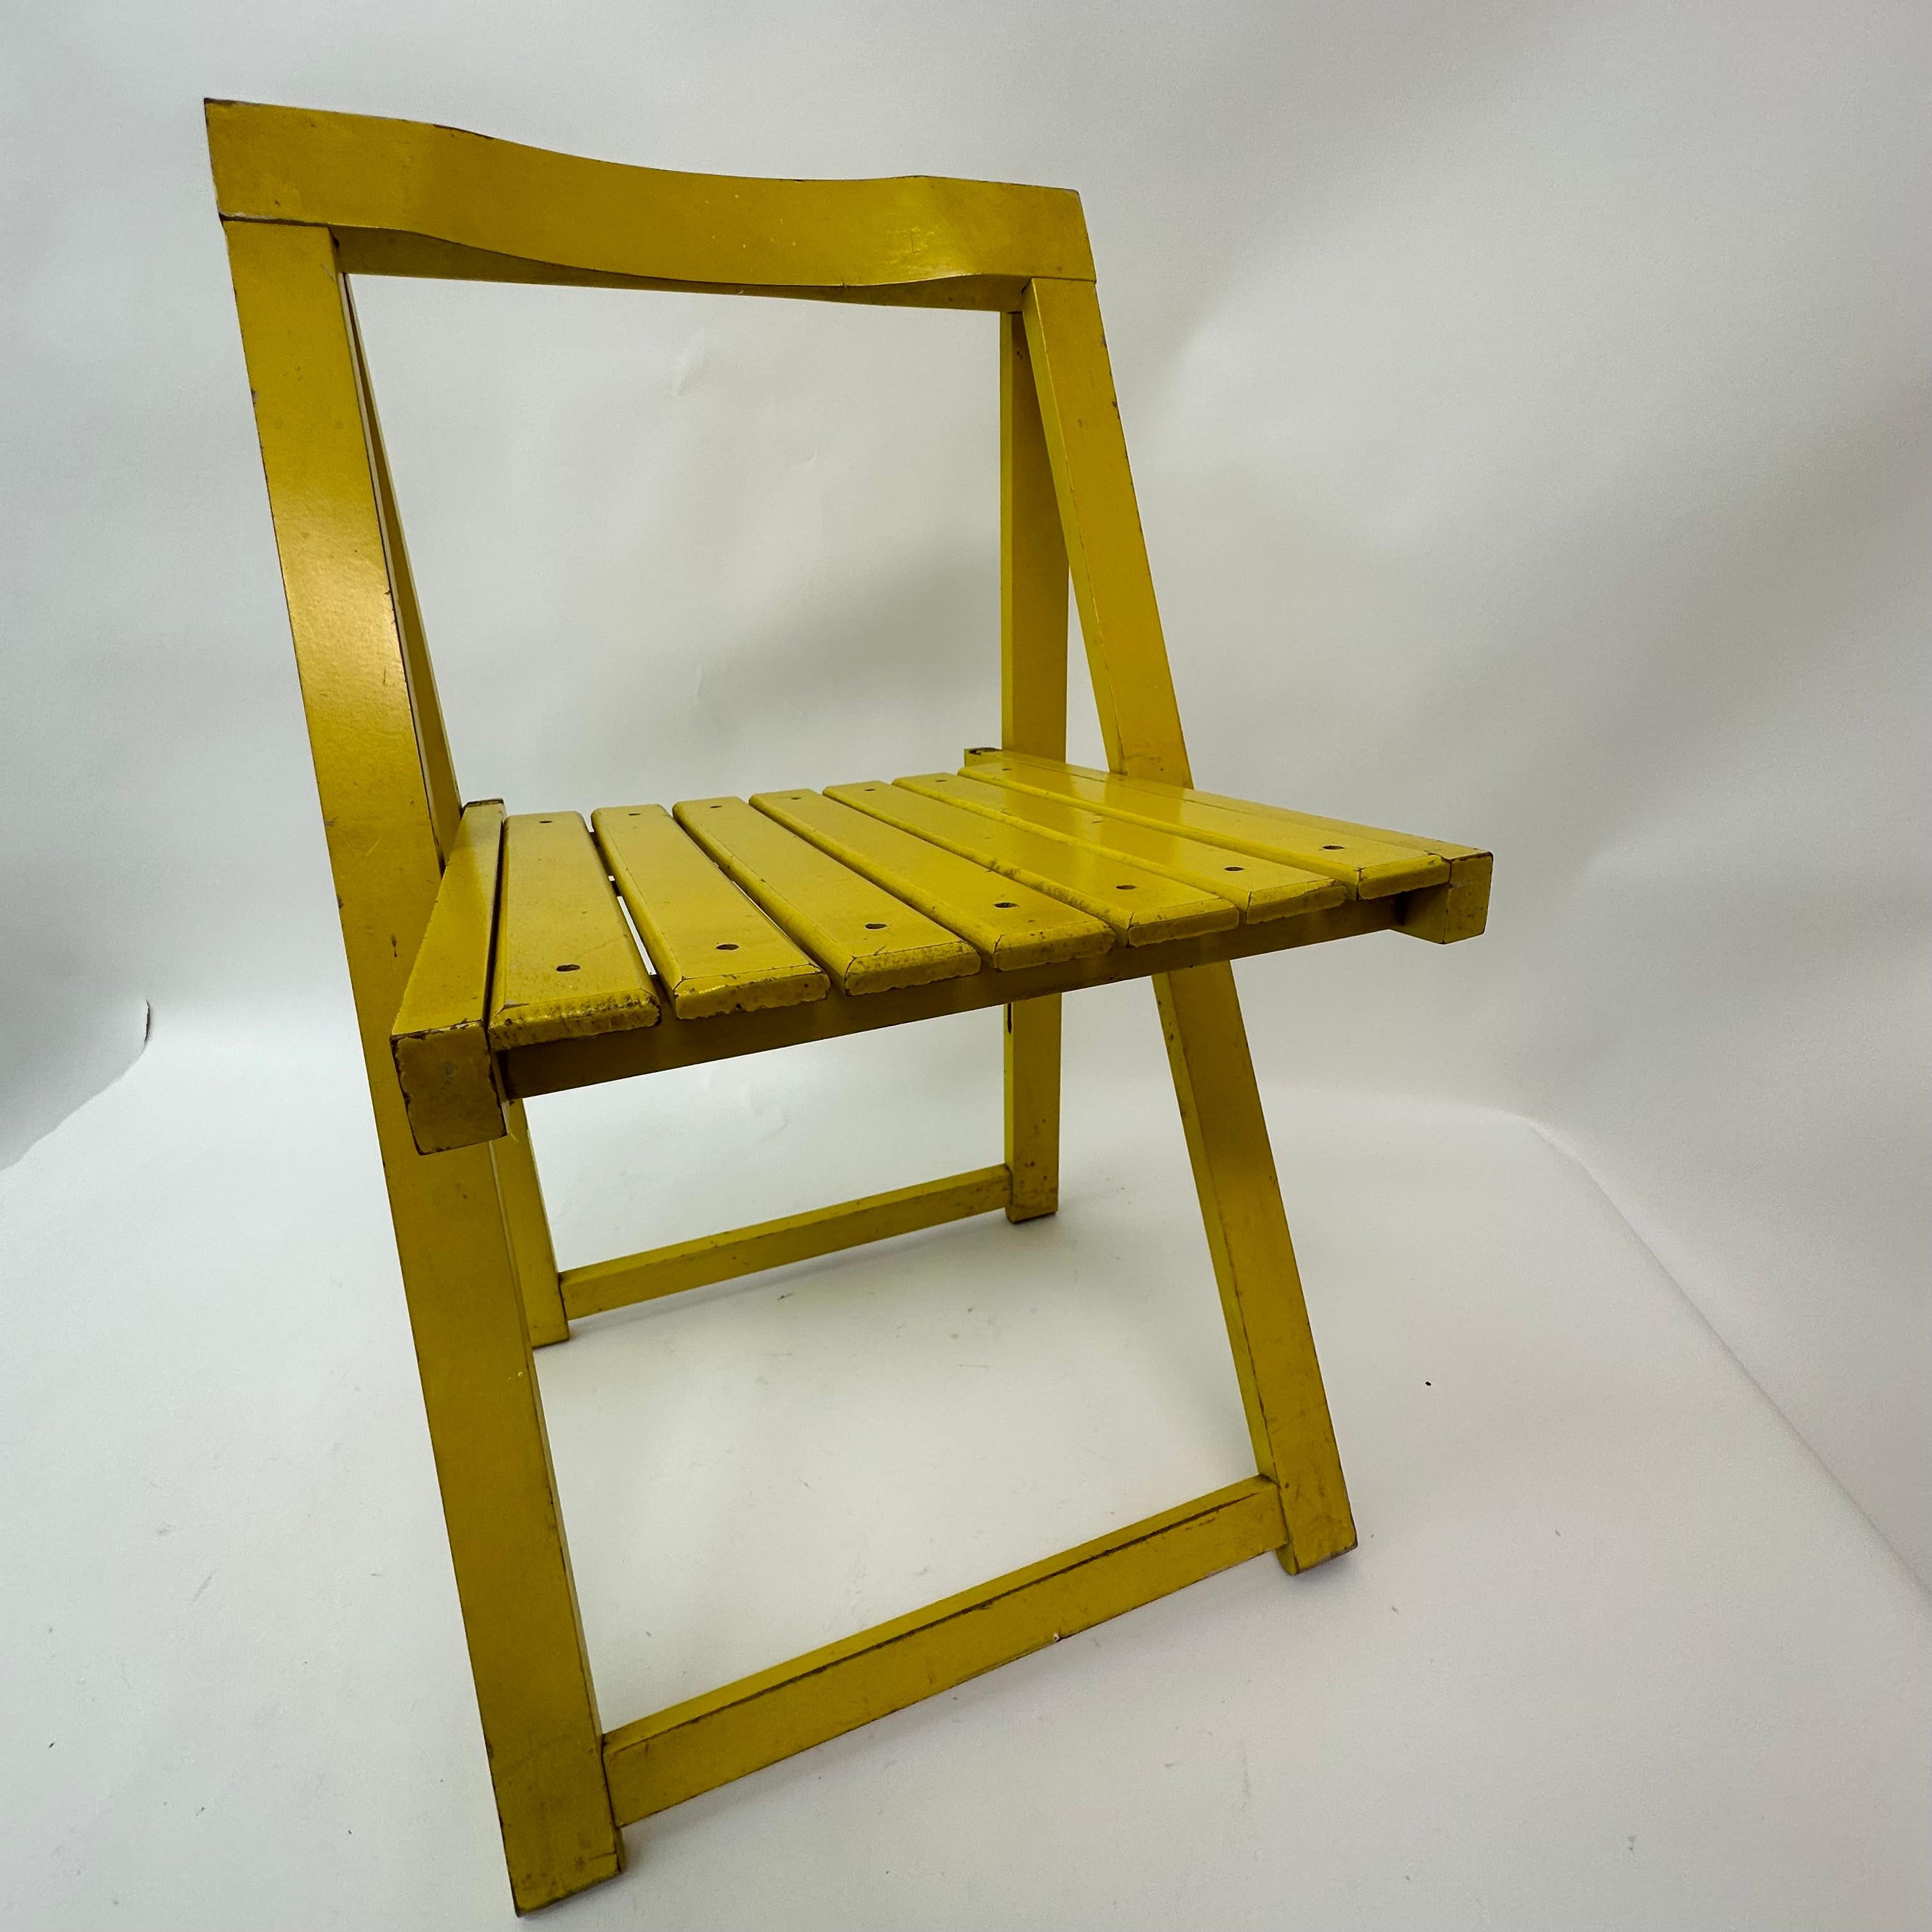 Aldo Jacober Folding Chair for Alberto Bazzani, 1960’s For Sale 11